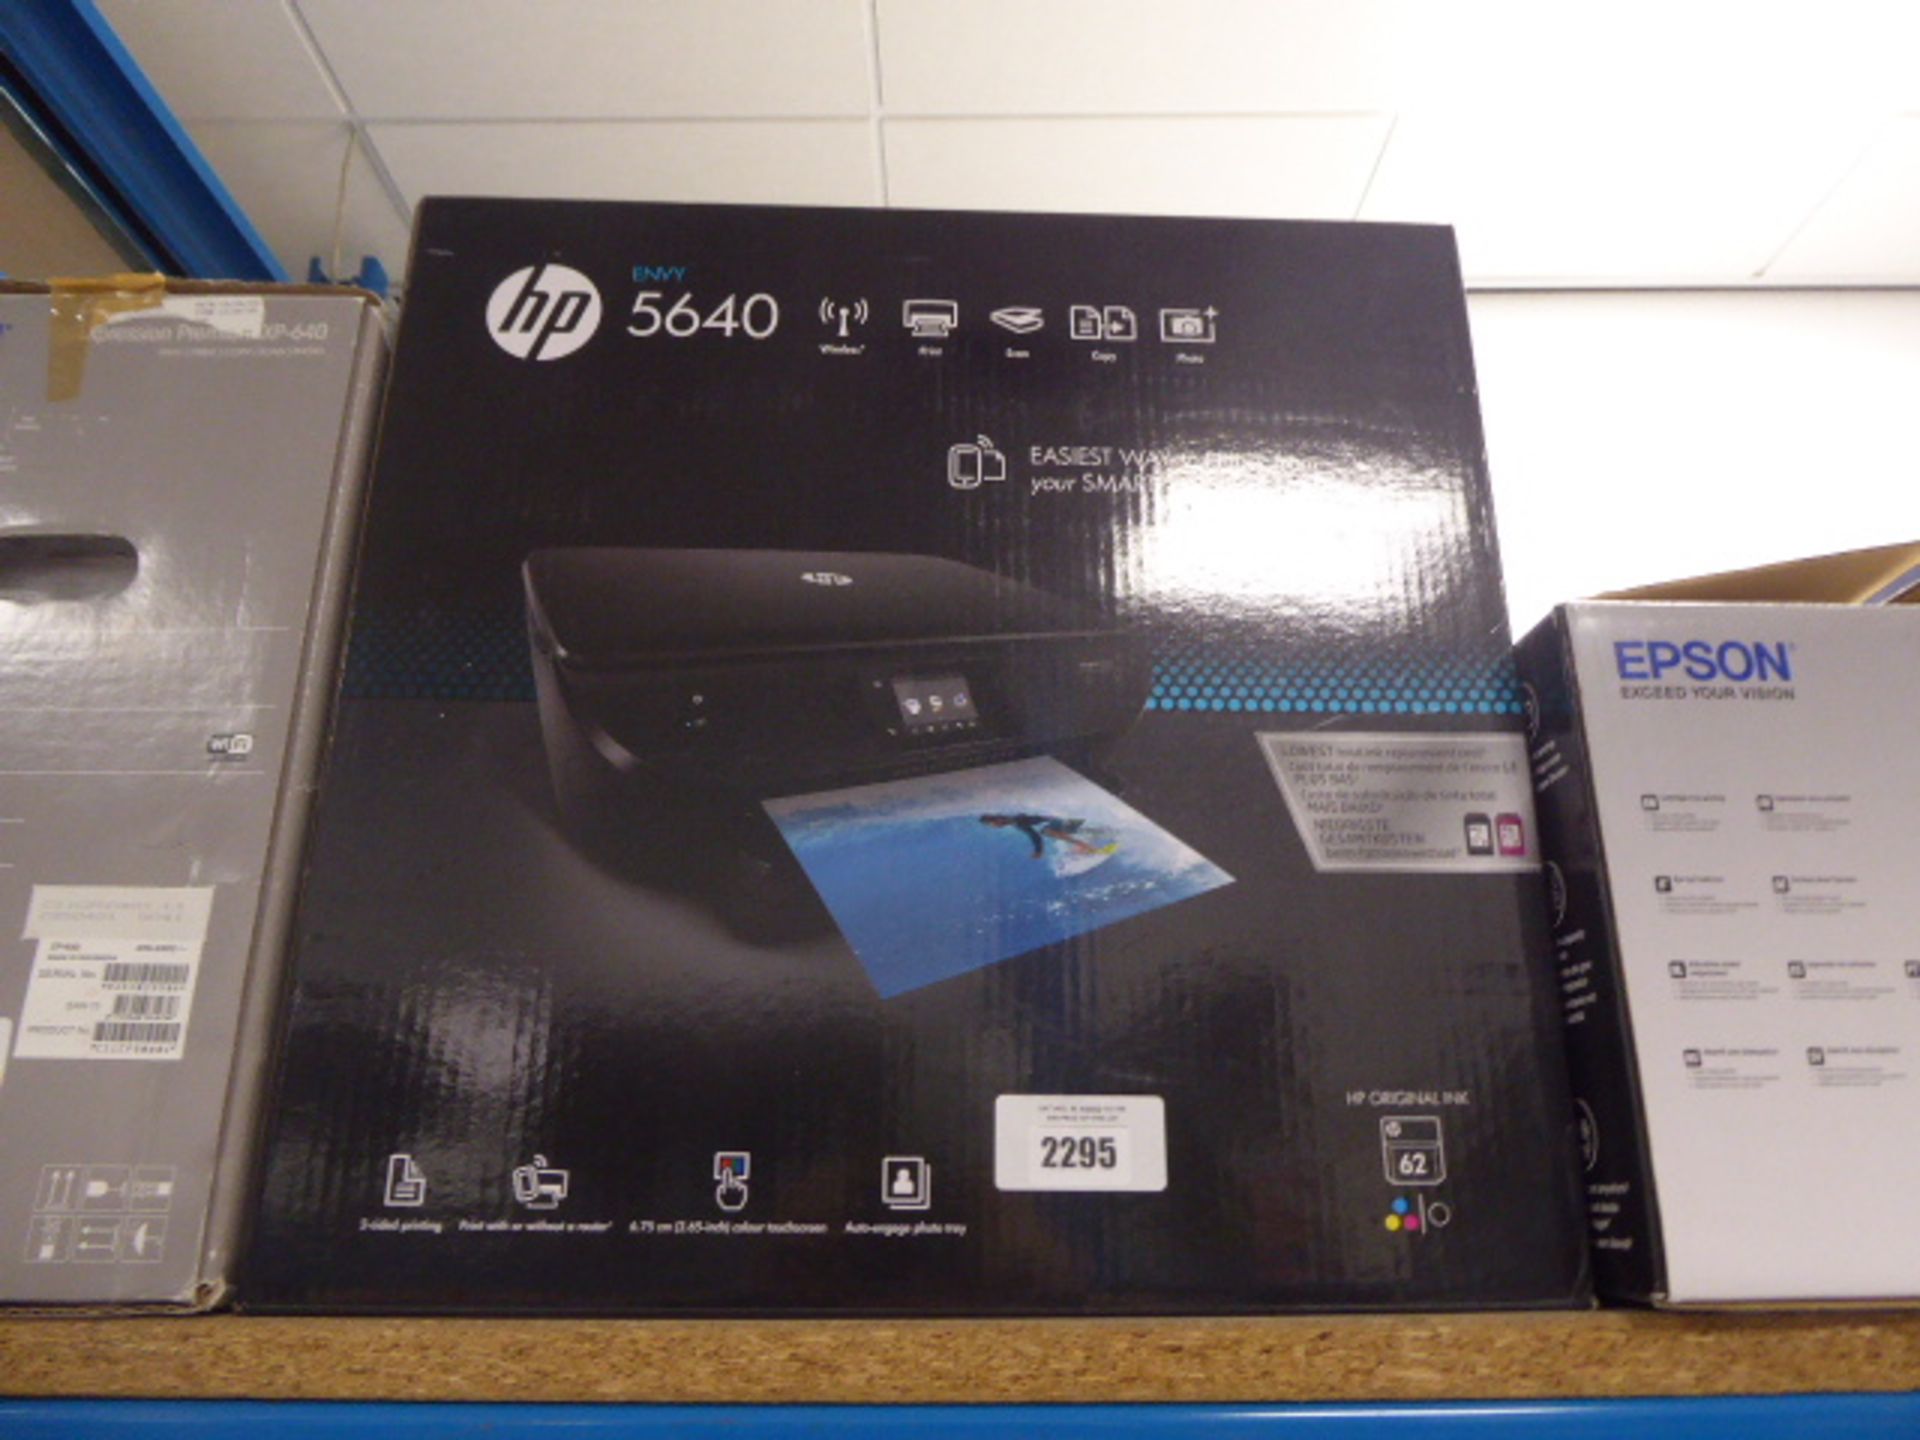 2472 HP Envy 5640 all in one printer in box